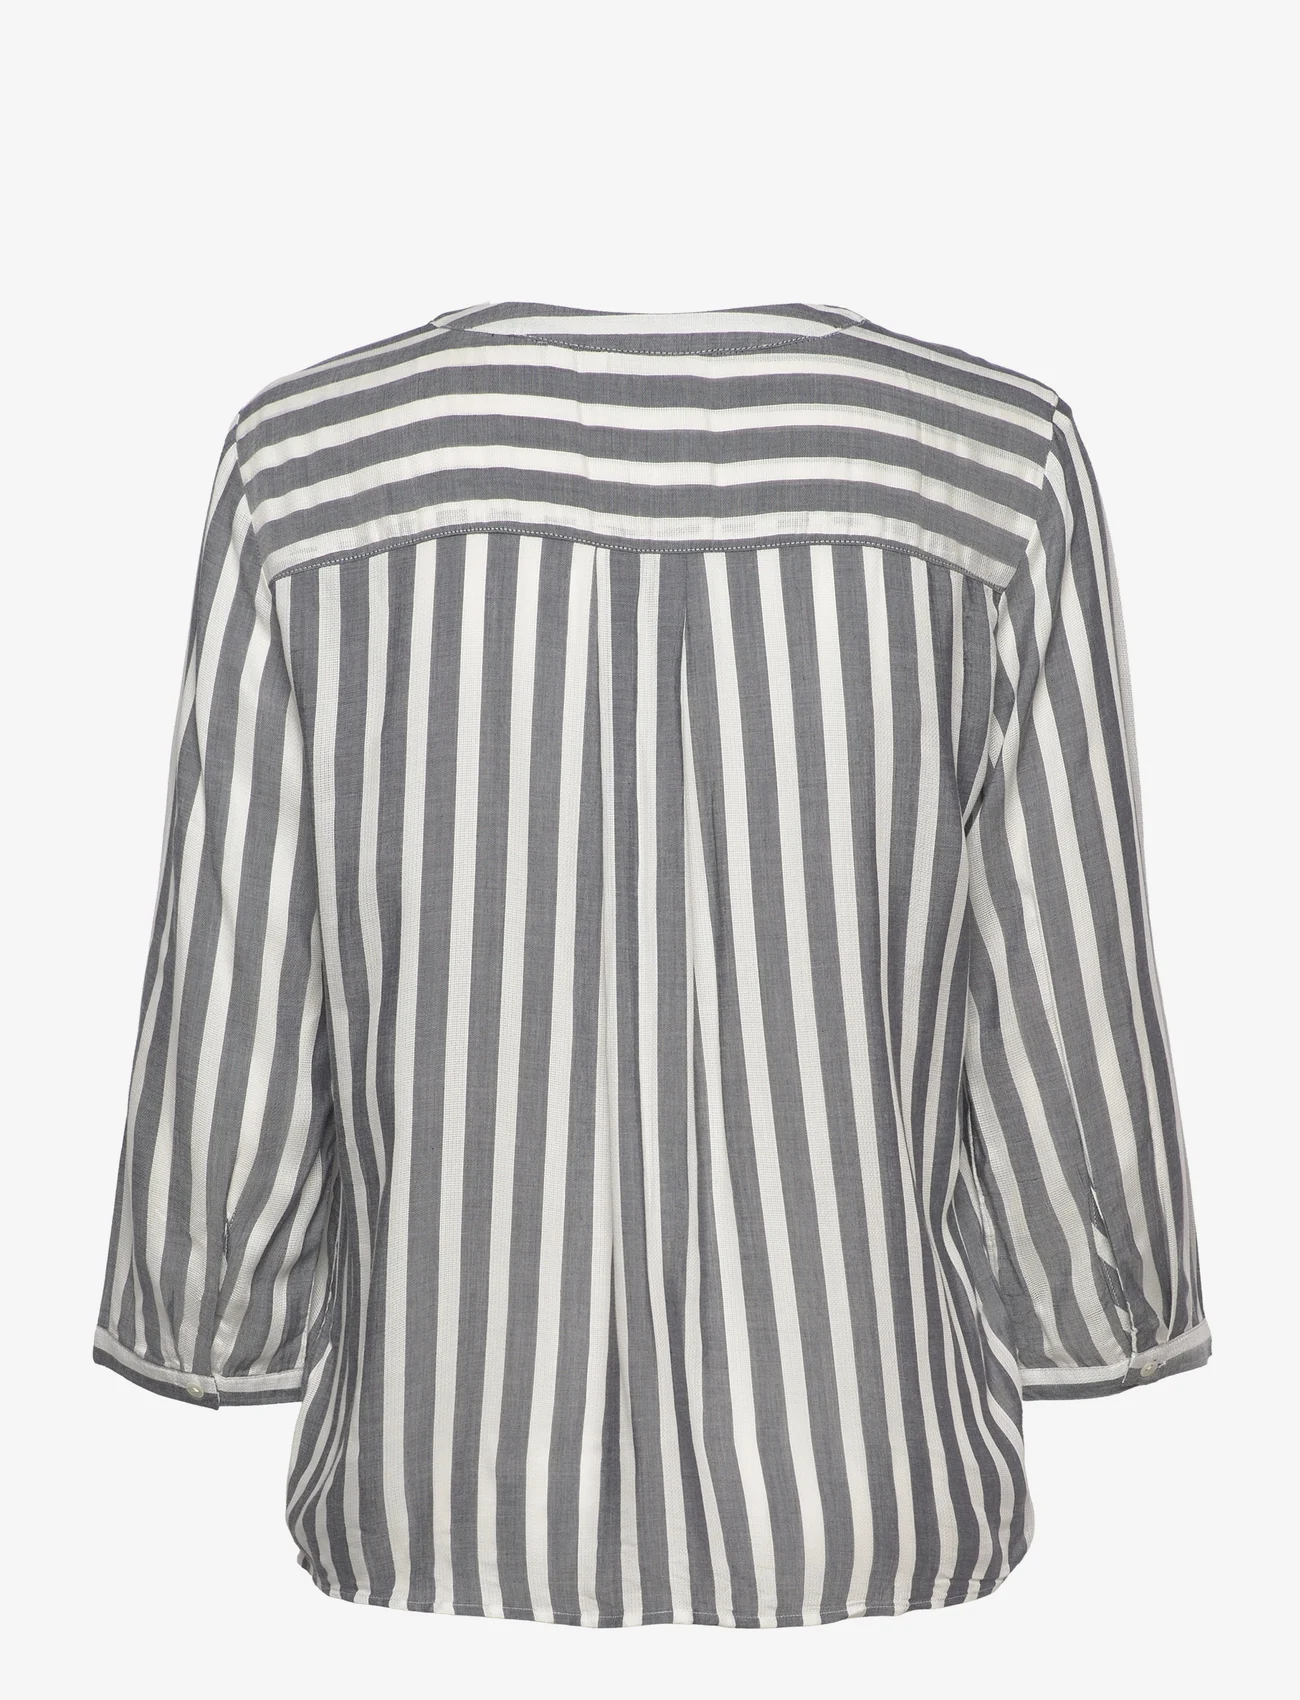 Tom Tailor - blouse striped - langärmlige blusen - offwhite navy vertical stripe - 1